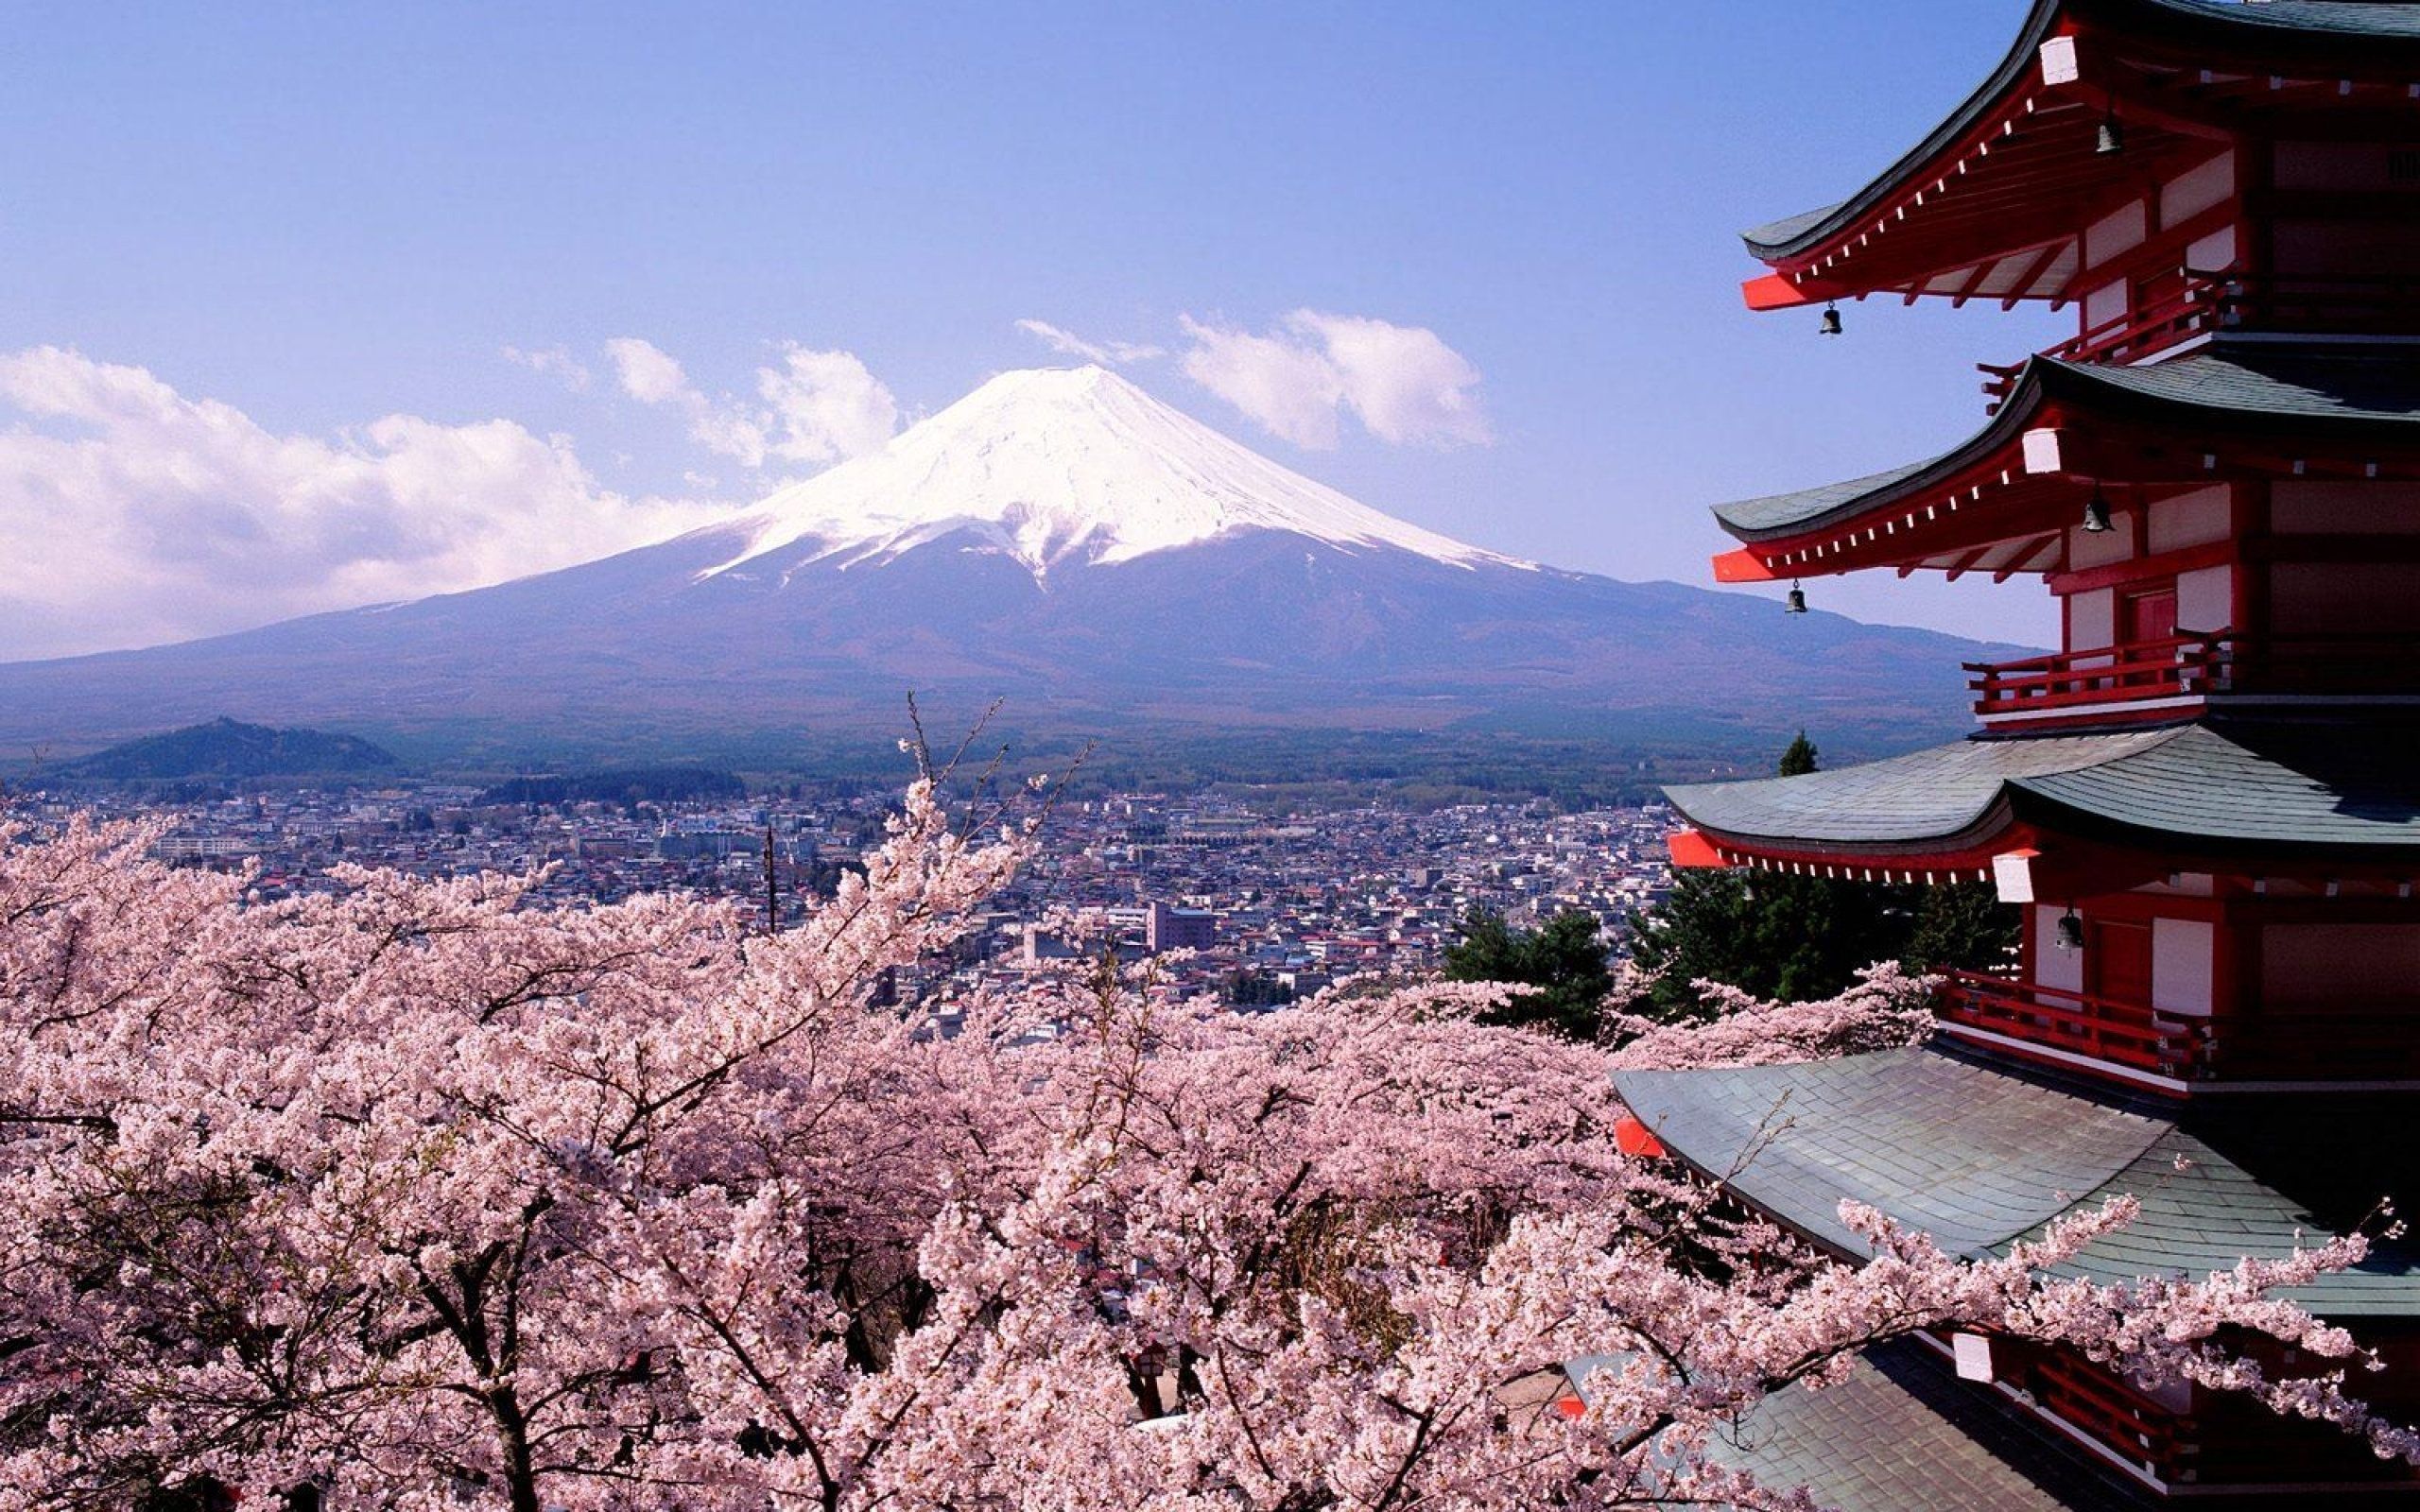 Nature Mount Fuji 4k Ultra HD Wallpaper